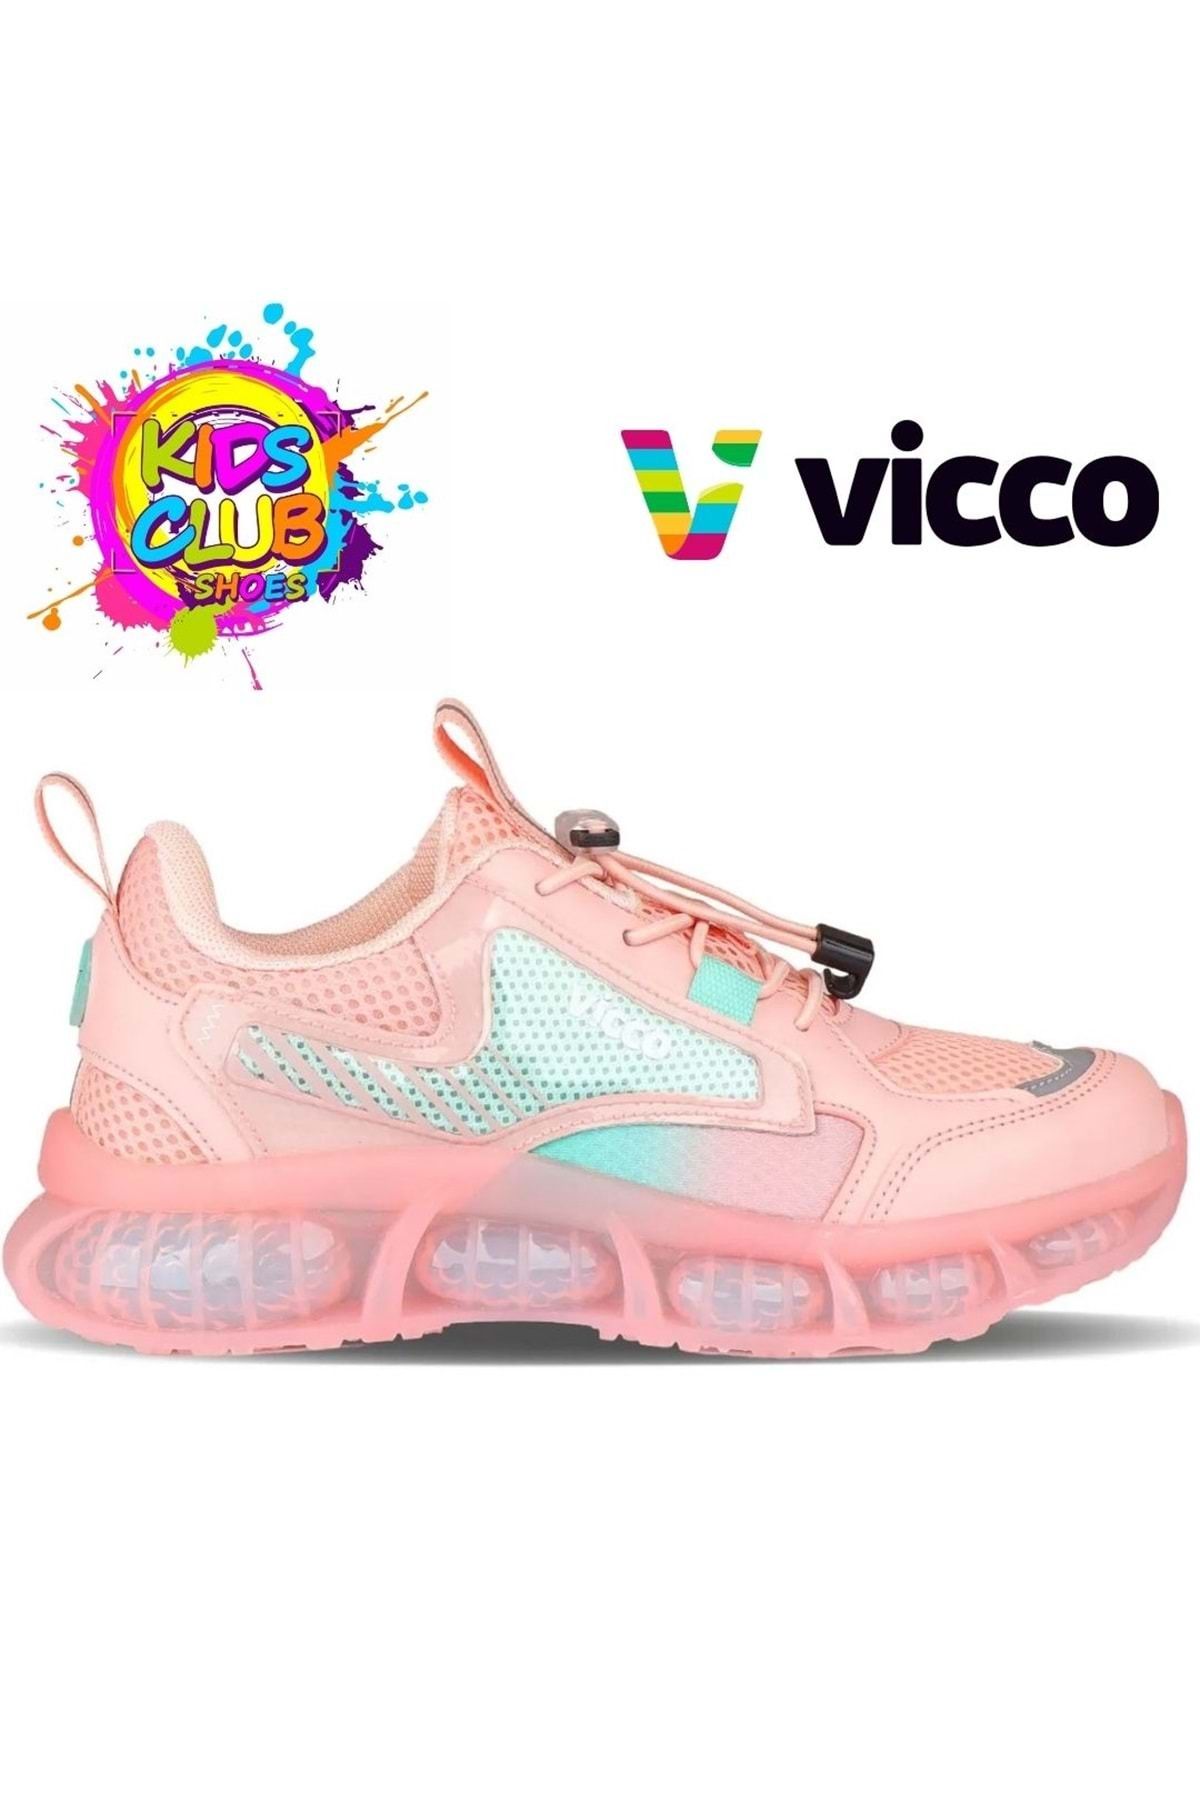 Kids Club Shoes Vicco Corn Ortopedik Çocuk Spor Ayakkabı PEMBE